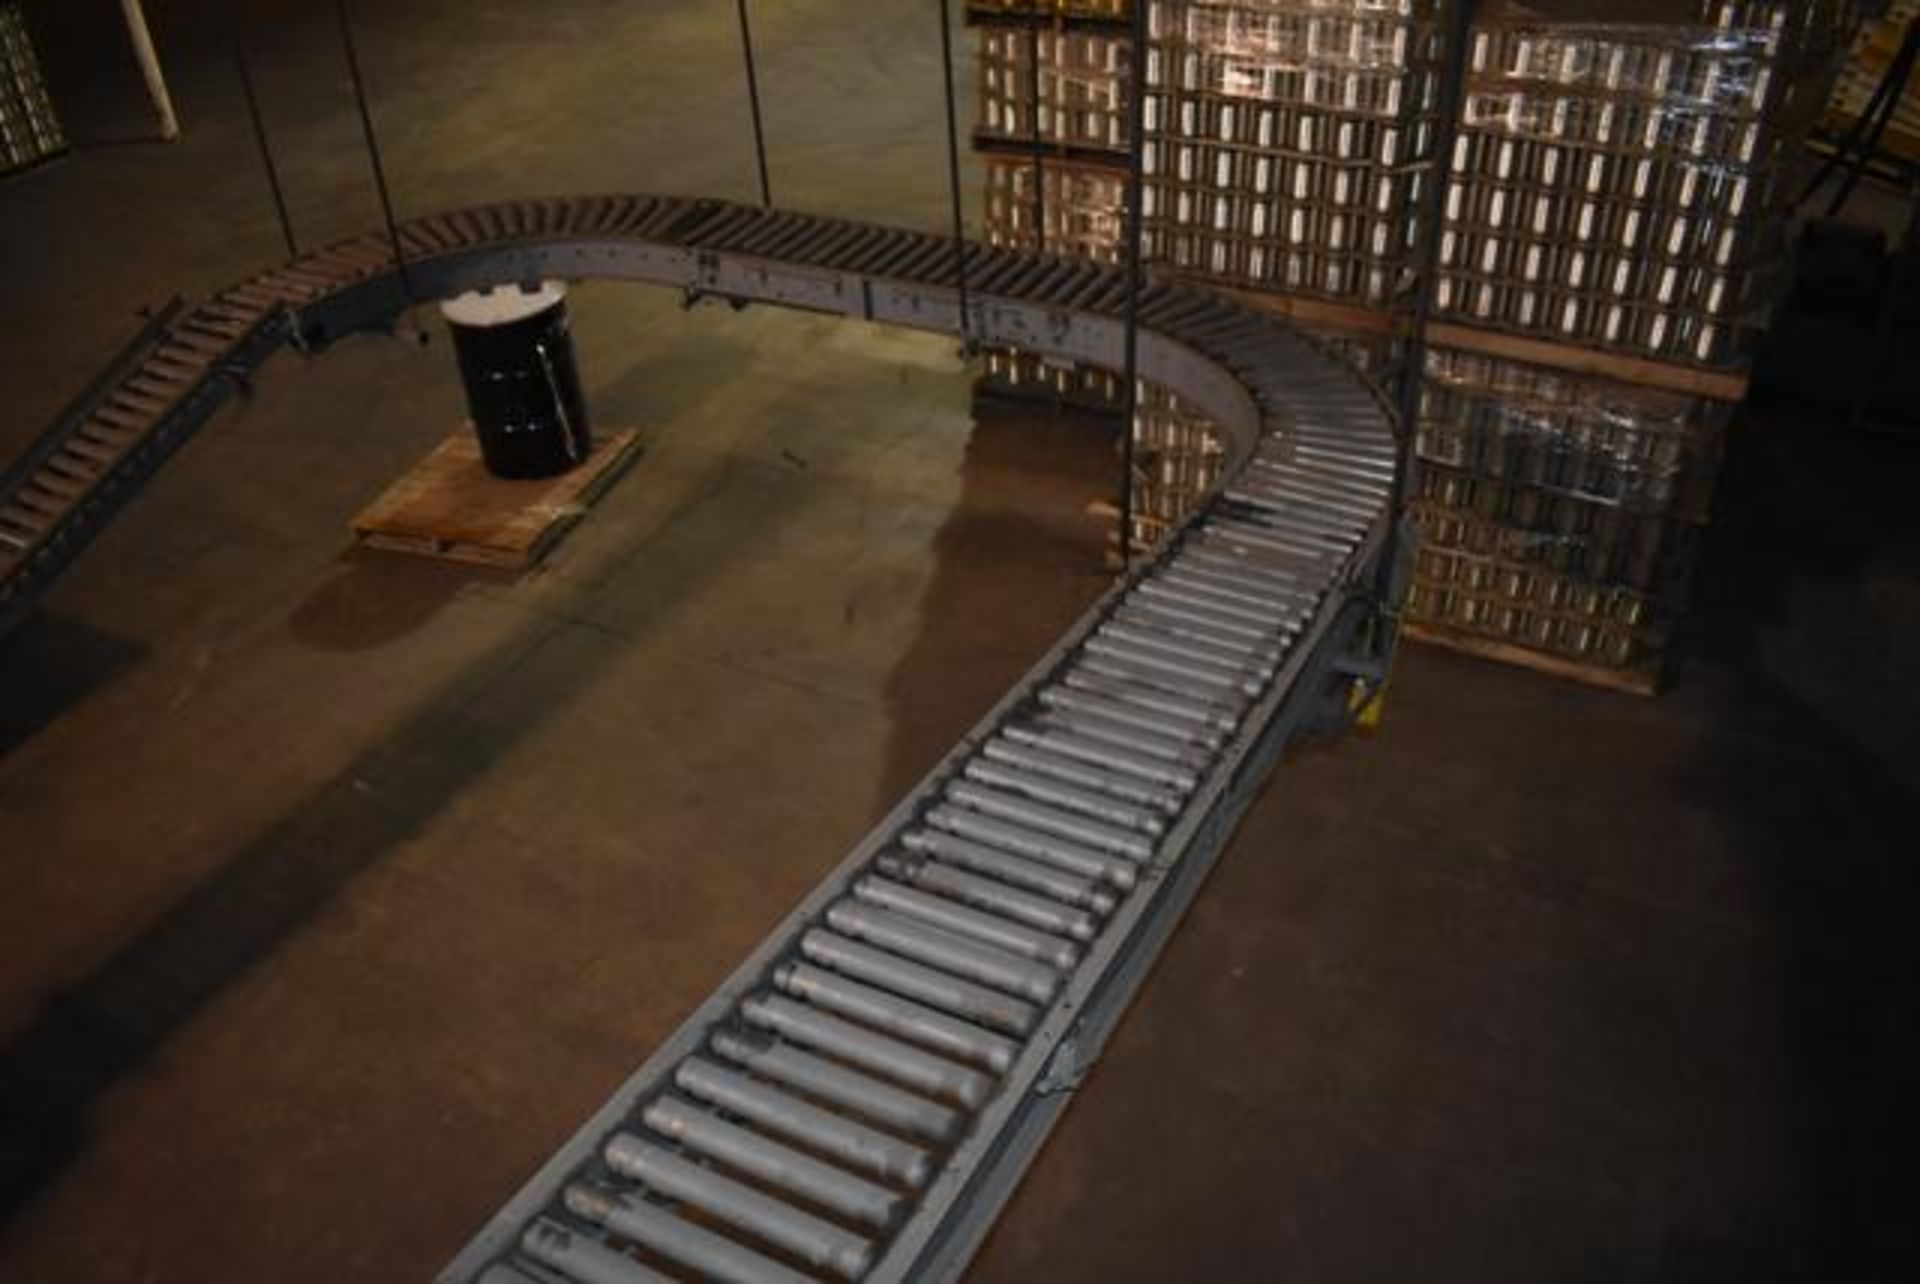 Hytrol Motorized Roller Conveyor Corner, 20' Length x 12" Wide Rollers - Image 2 of 2